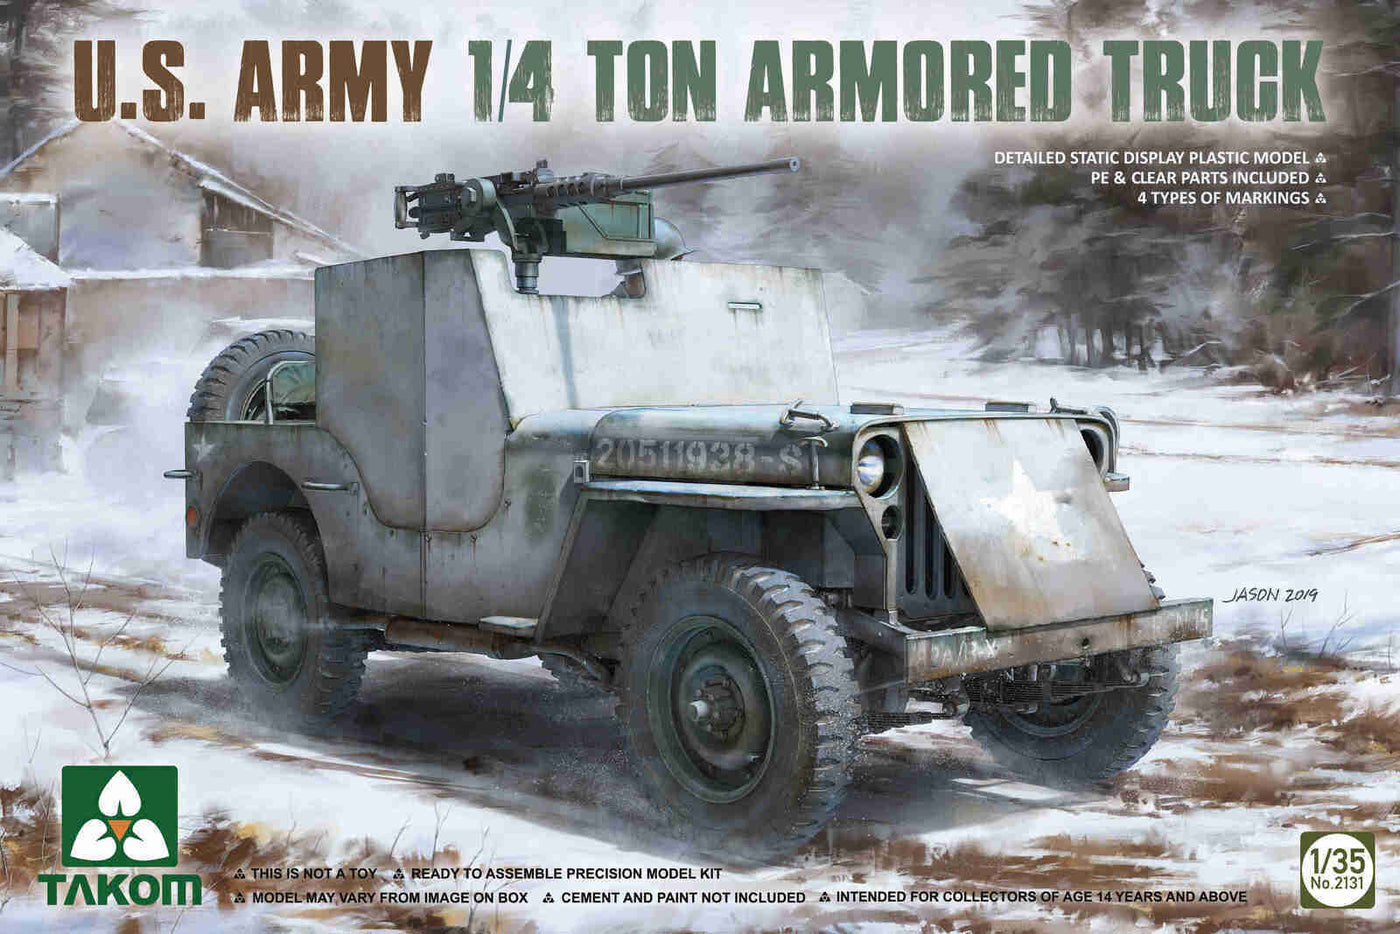 2131 1/35 U.S. Army 1/4 ton armored truck Plastic Model Kit